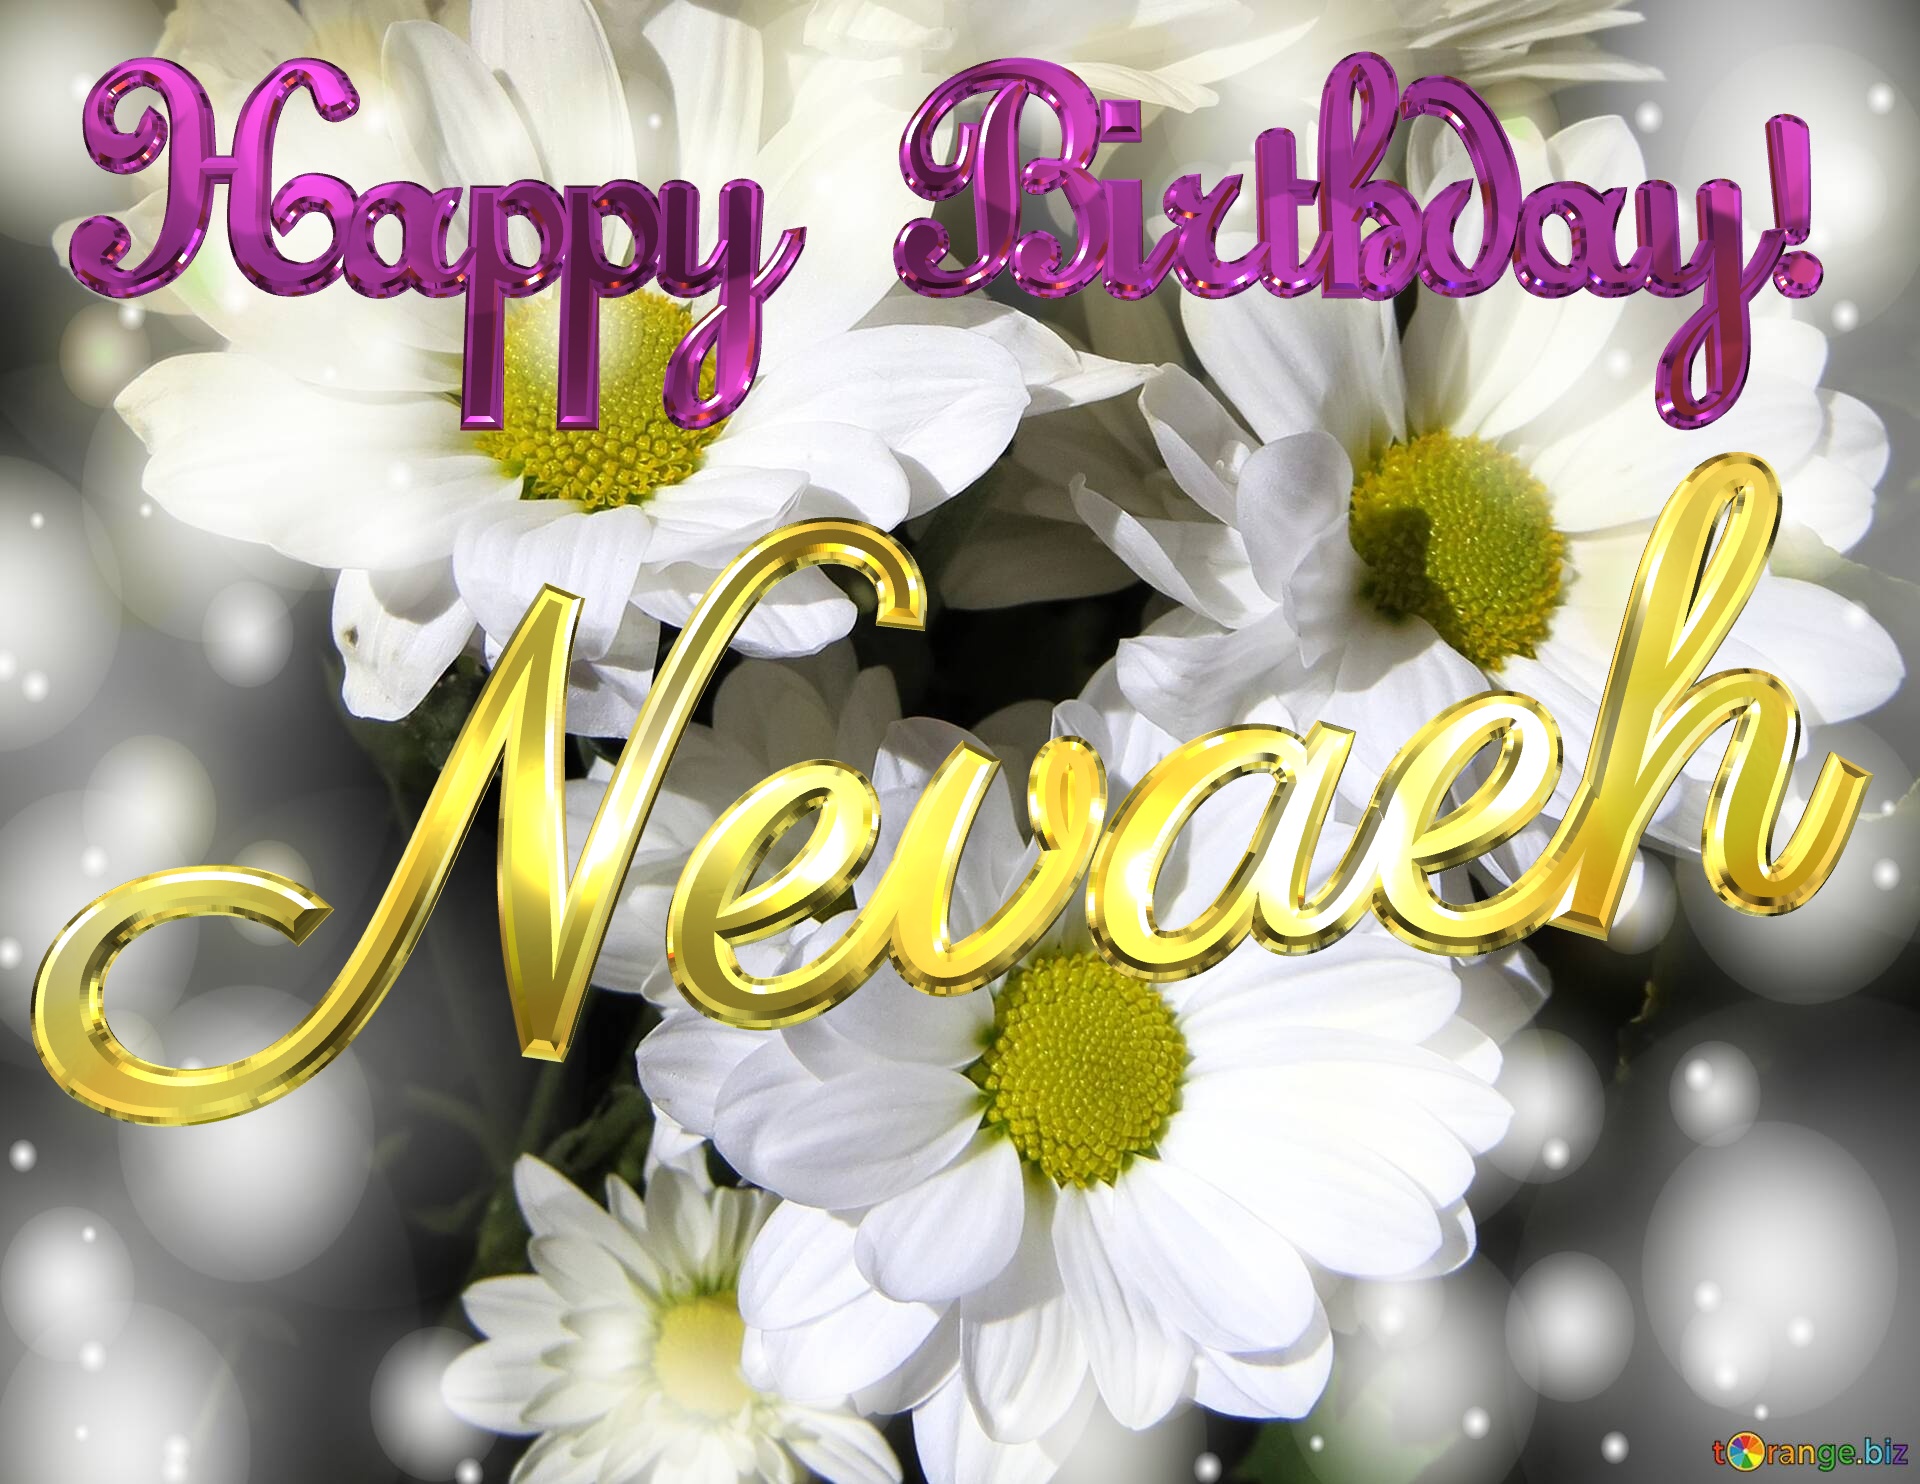 Nevaeh Happy Birthday! White flowers background №0